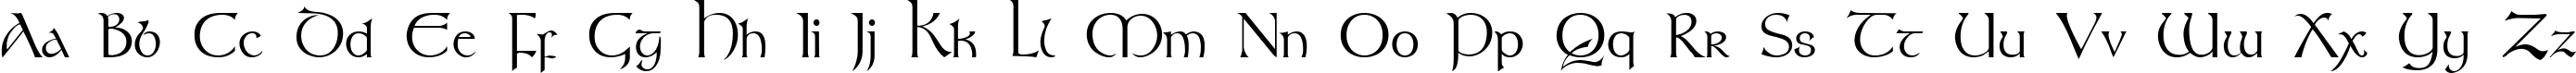 Пример написания английского алфавита шрифтом Stonehenge